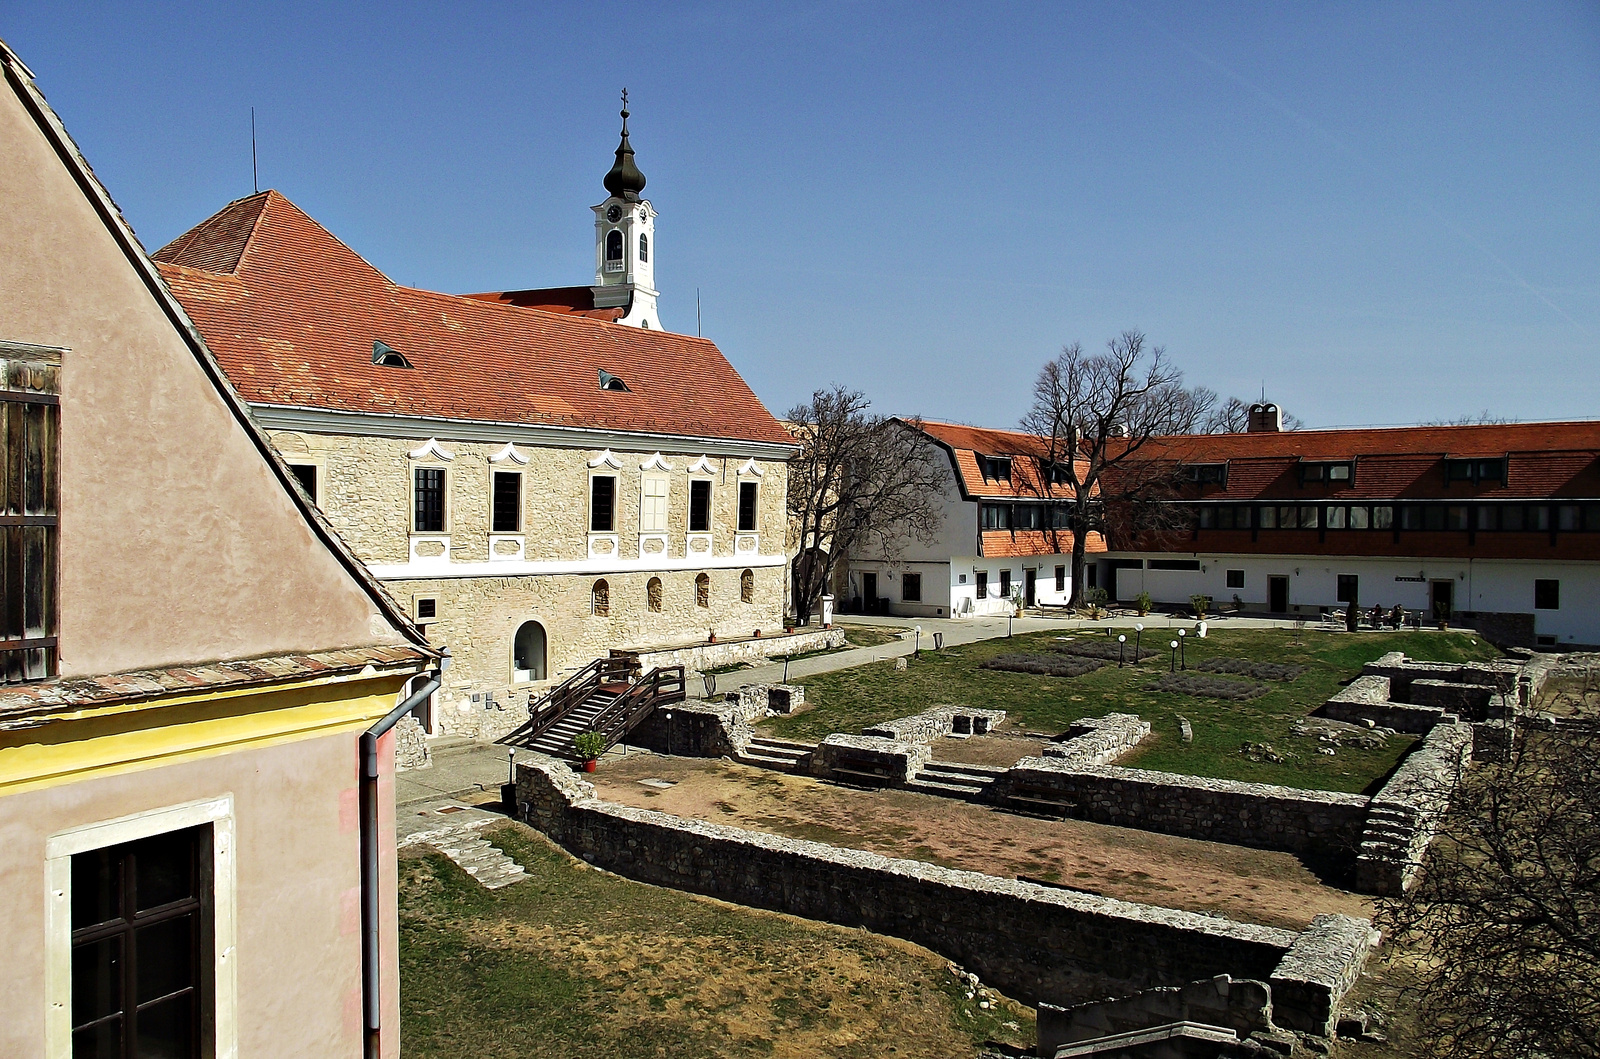 Pécsvárad - Kolostorvár